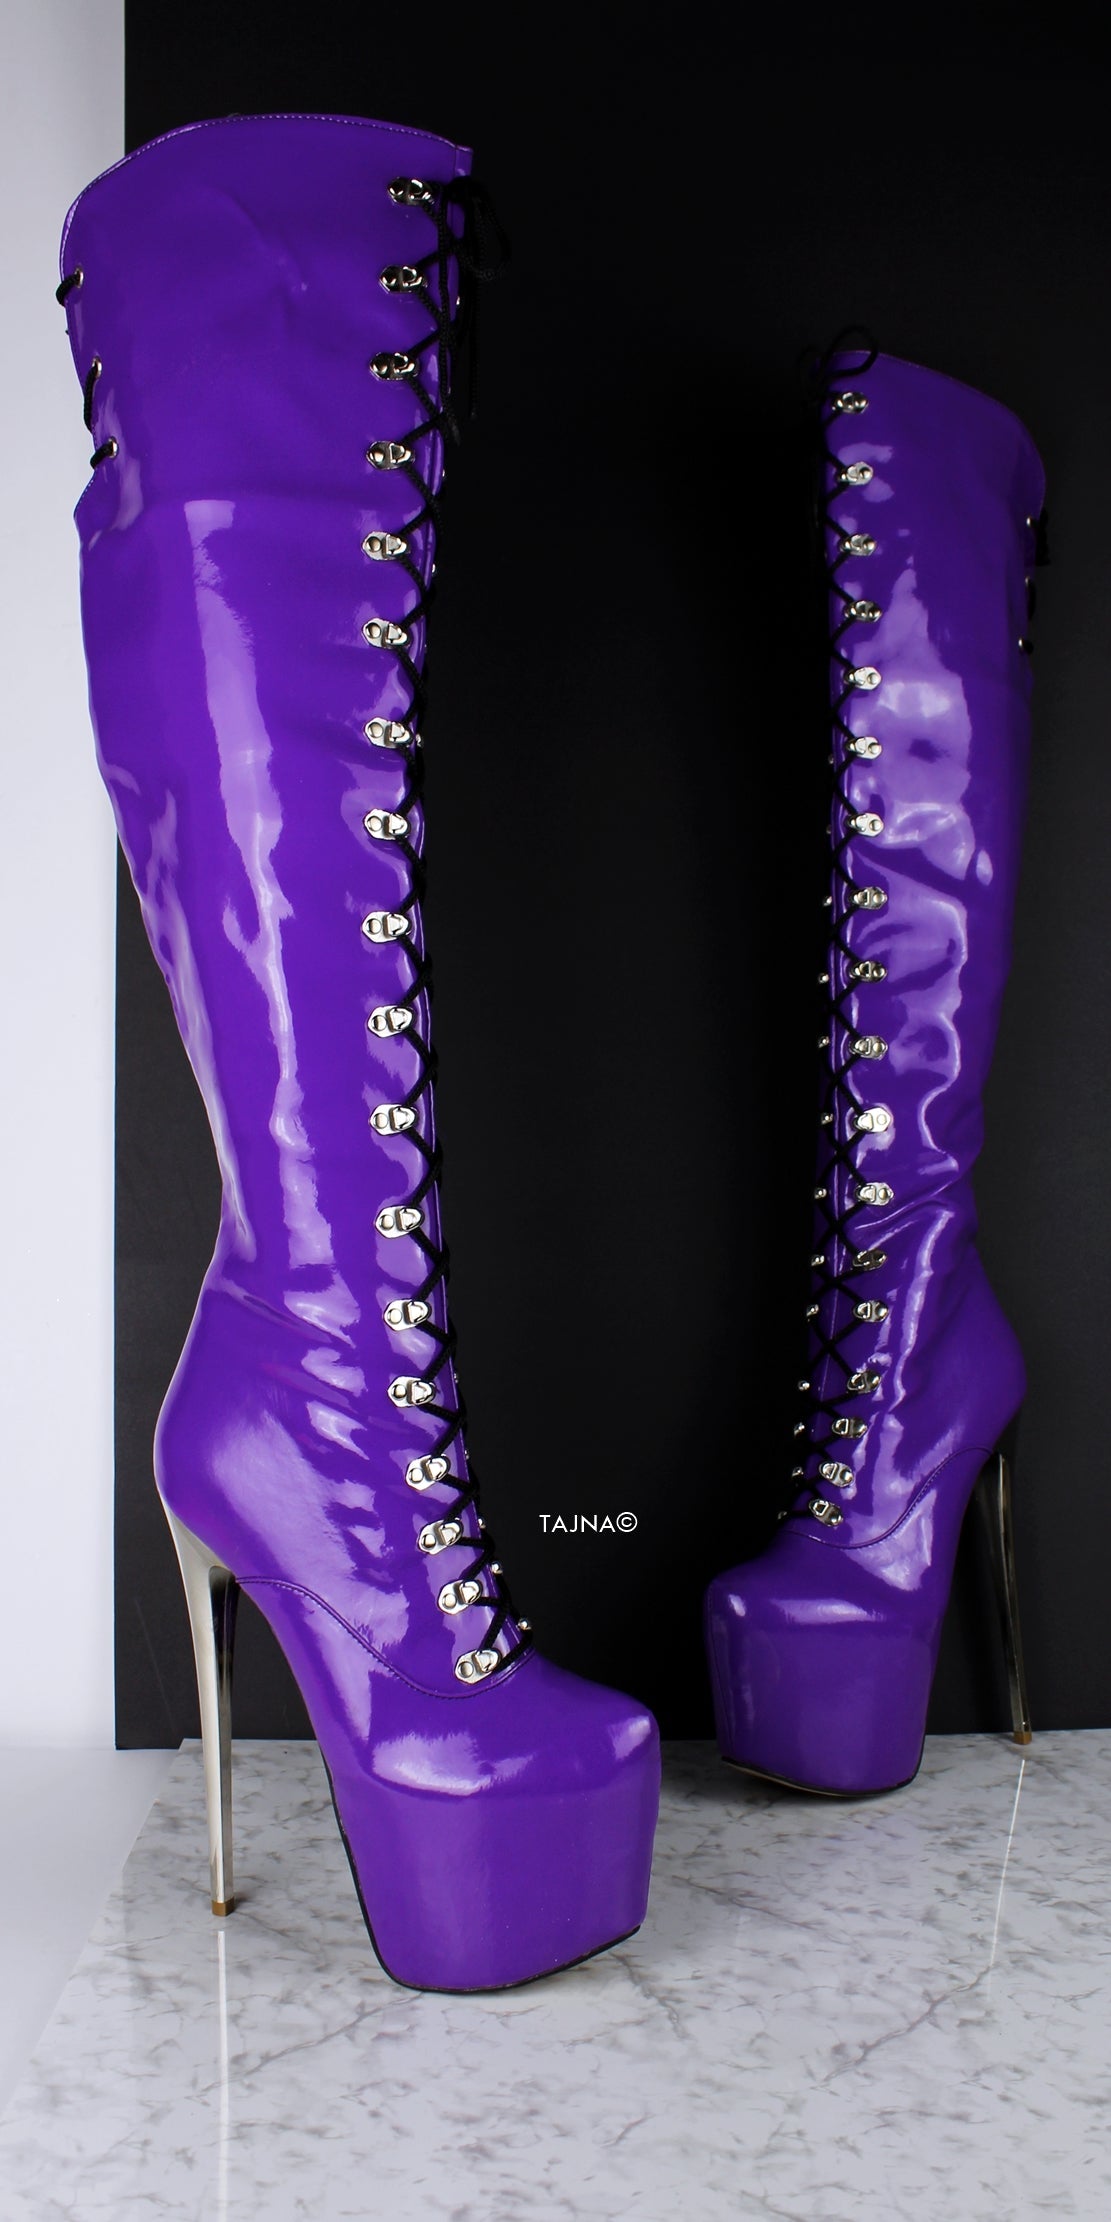 Purple Gloss Patent Military Style Lace Up Boots - Tajna Club